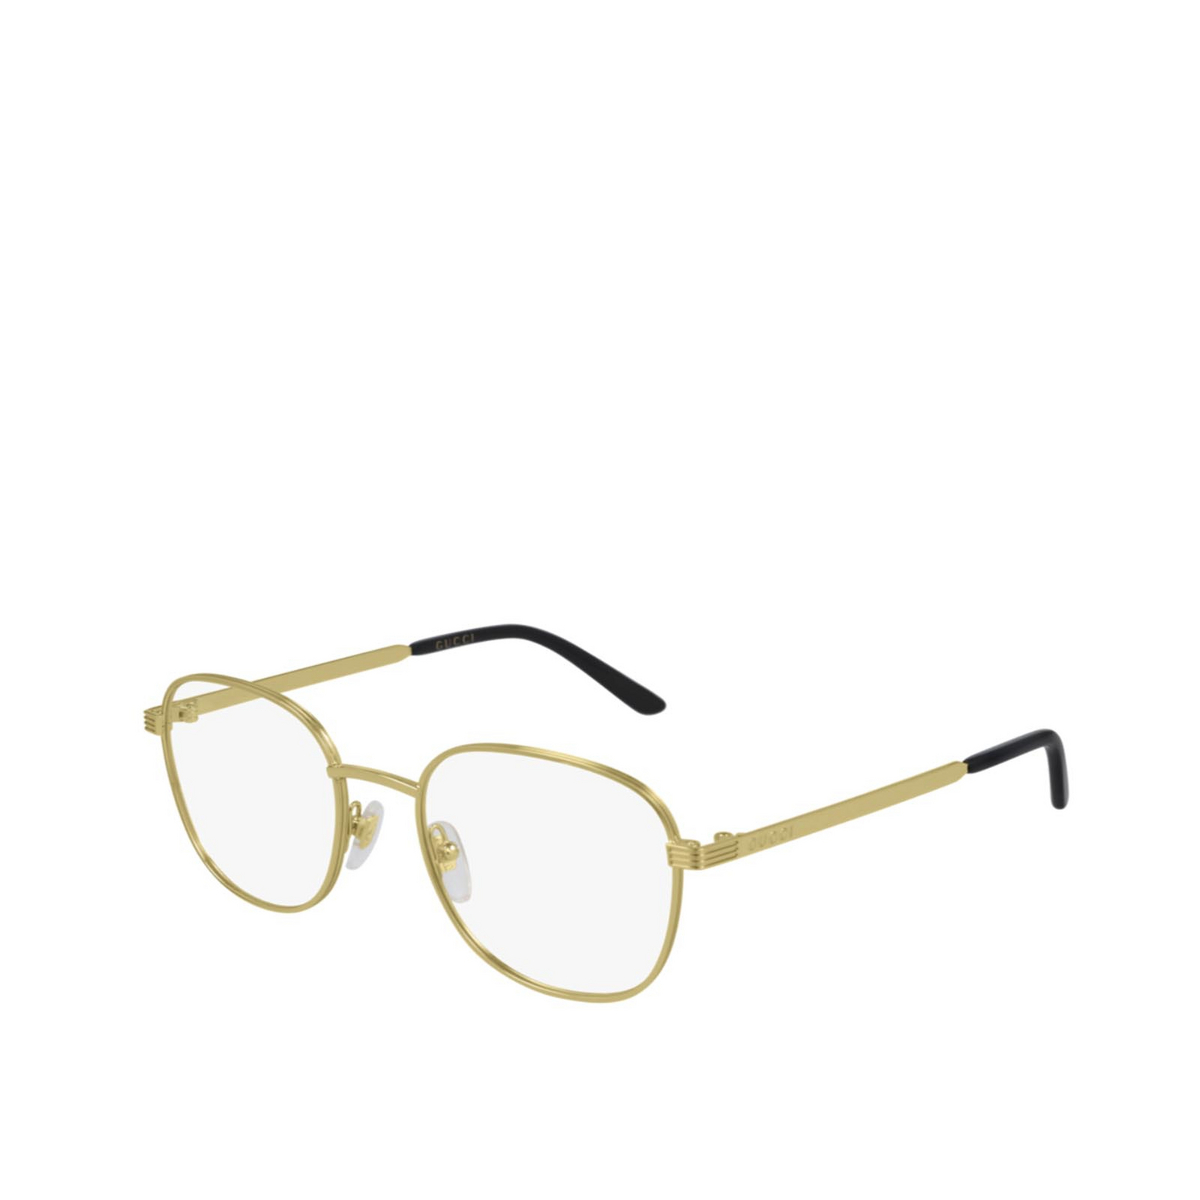 Gucci® Square Eyeglasses: GG0805O color Gold 001 - 2/2.